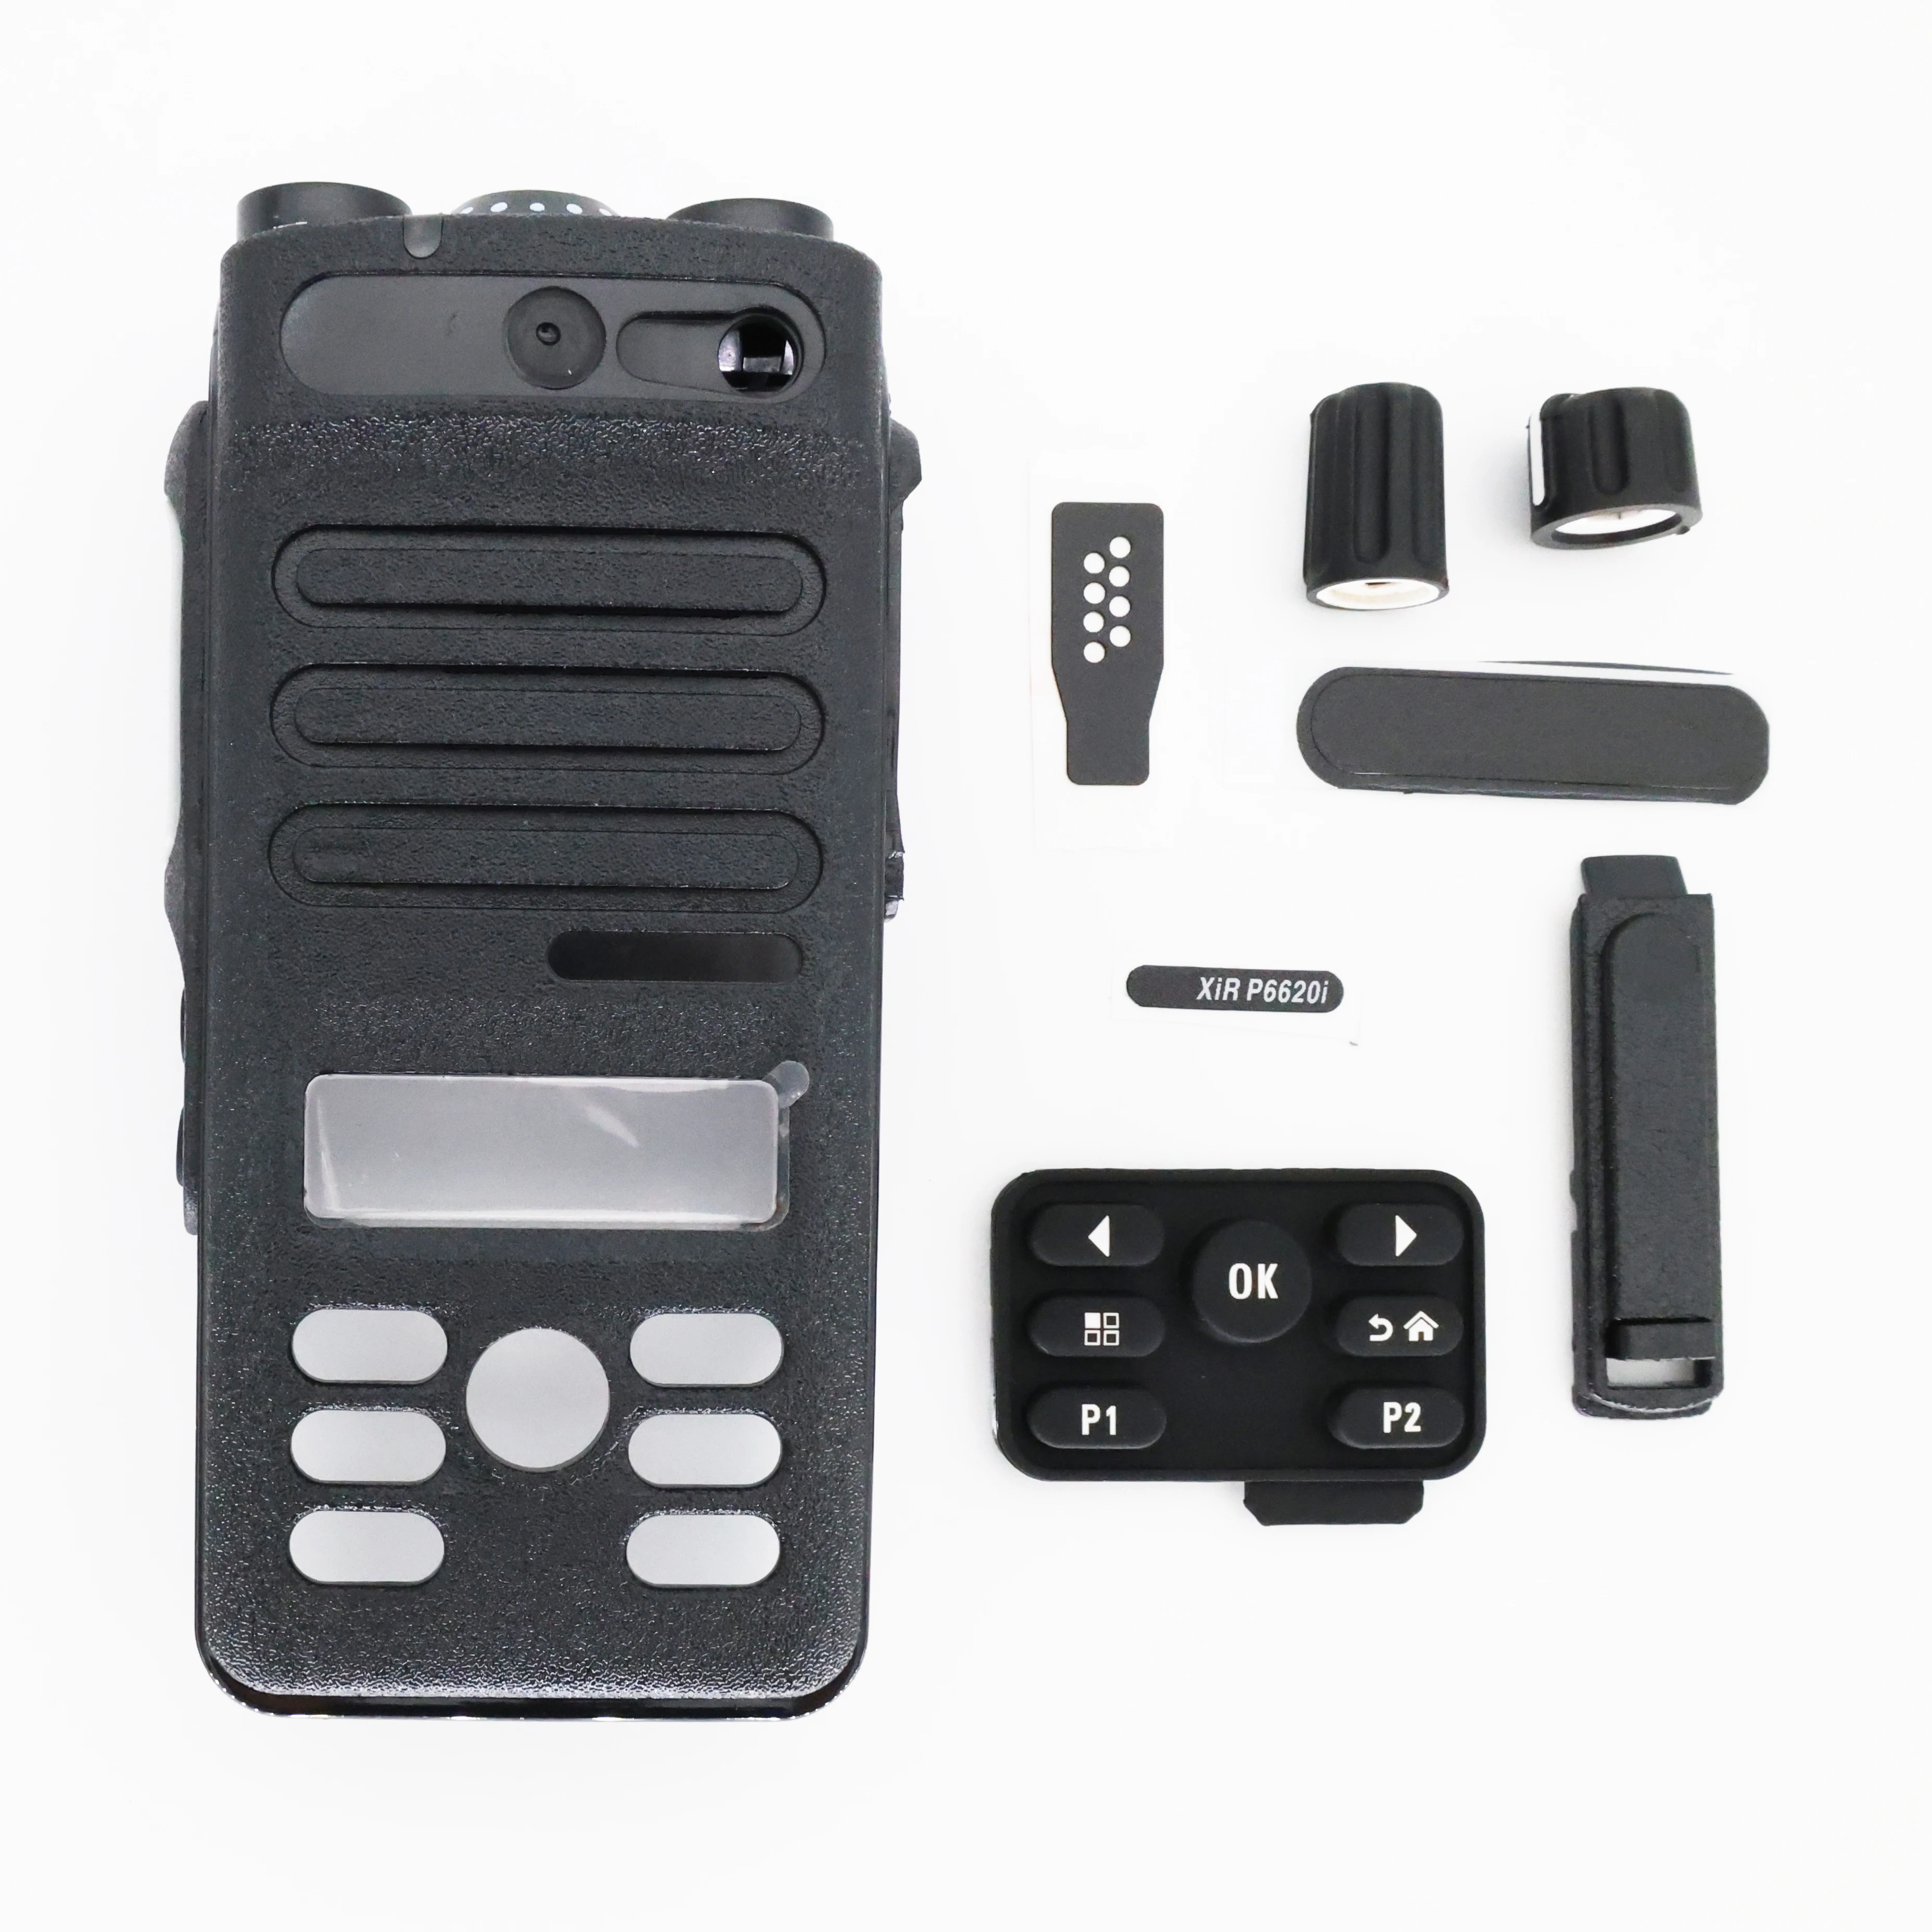 Black Replacement Walkie-talkies Housing Cover Case Kit for Motorola Radio XPR3500E XIR P6620i DEP570e DP2600e